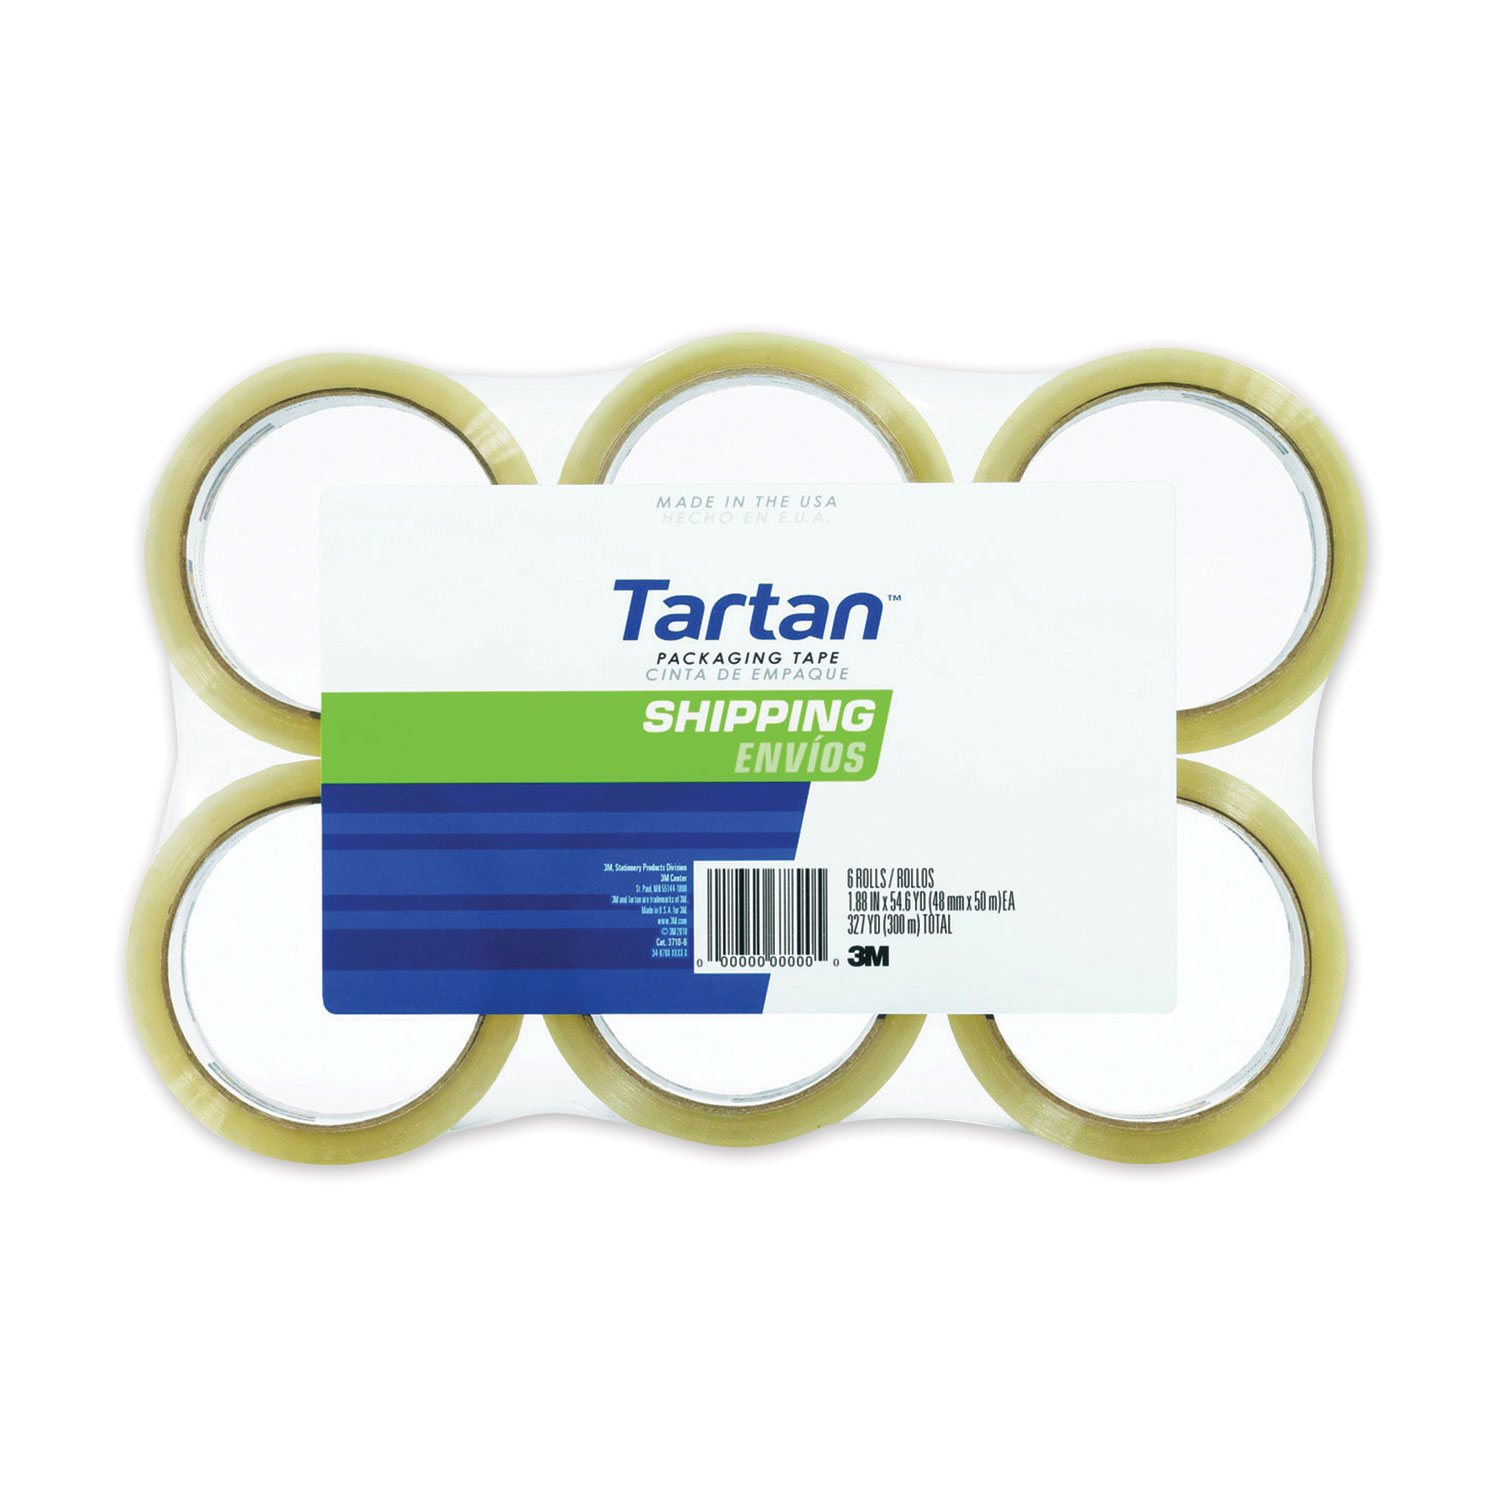 Tartan™ 3710 Packaging Tape, 3 Core, 1.88 x 109.3 yds, Clear, 6/Pack